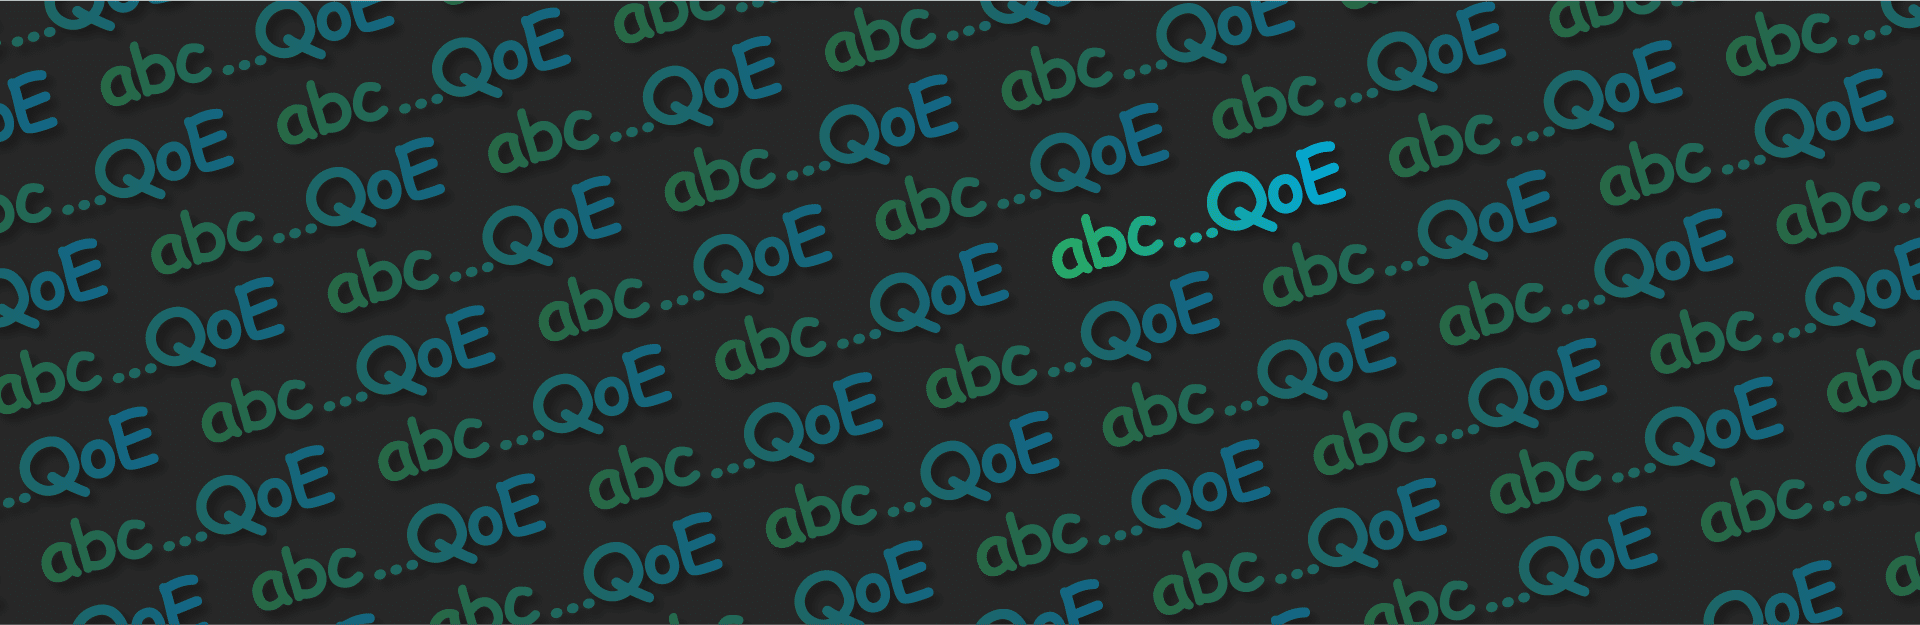 Glossary of QoE, Ateme